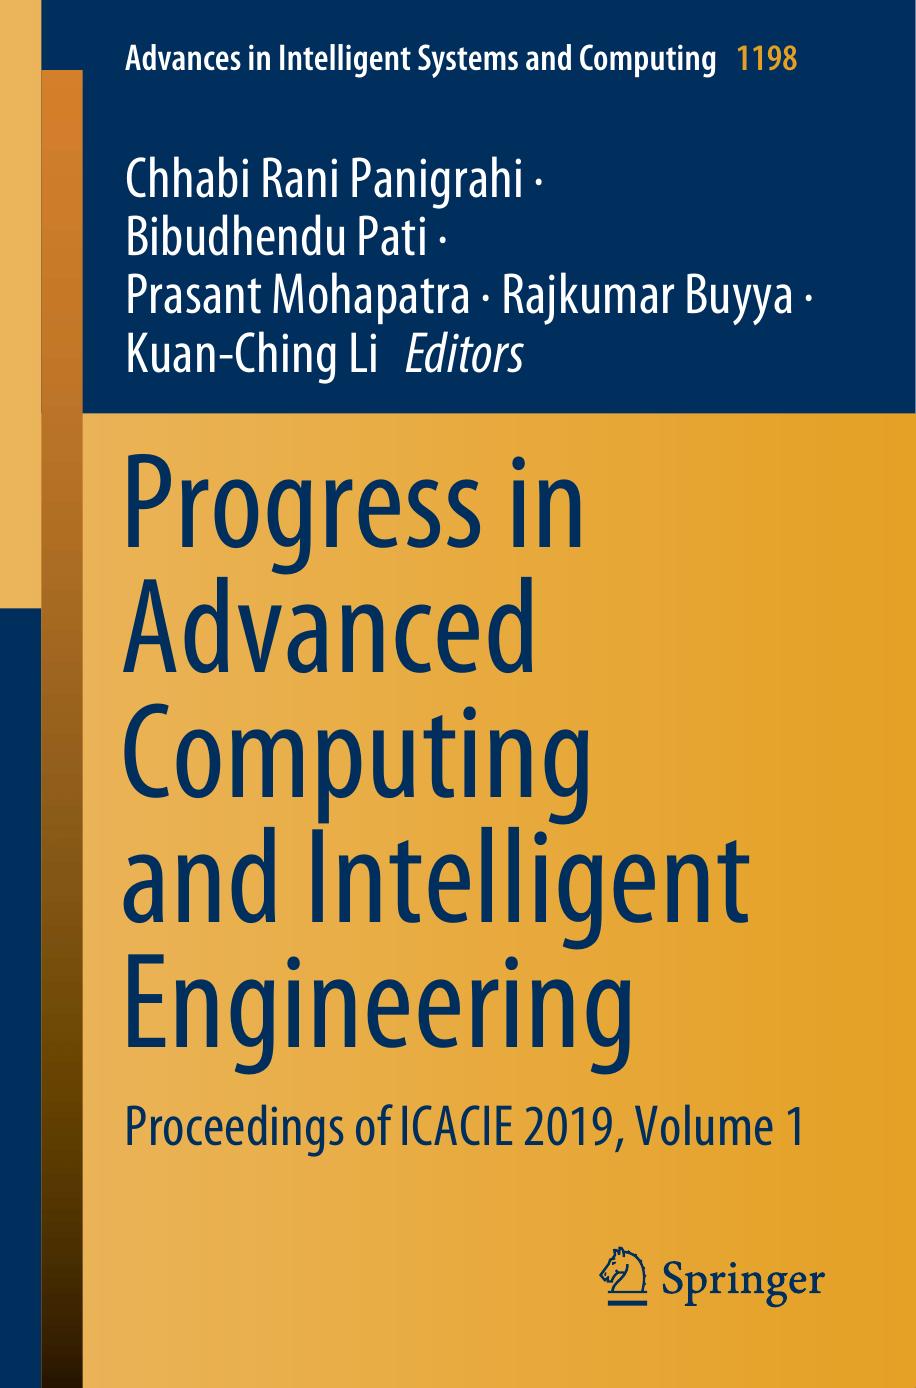 Progress in Advanced Computing and Intelligent Engineering: Proceedings of ICACIE 2019, Volume 1